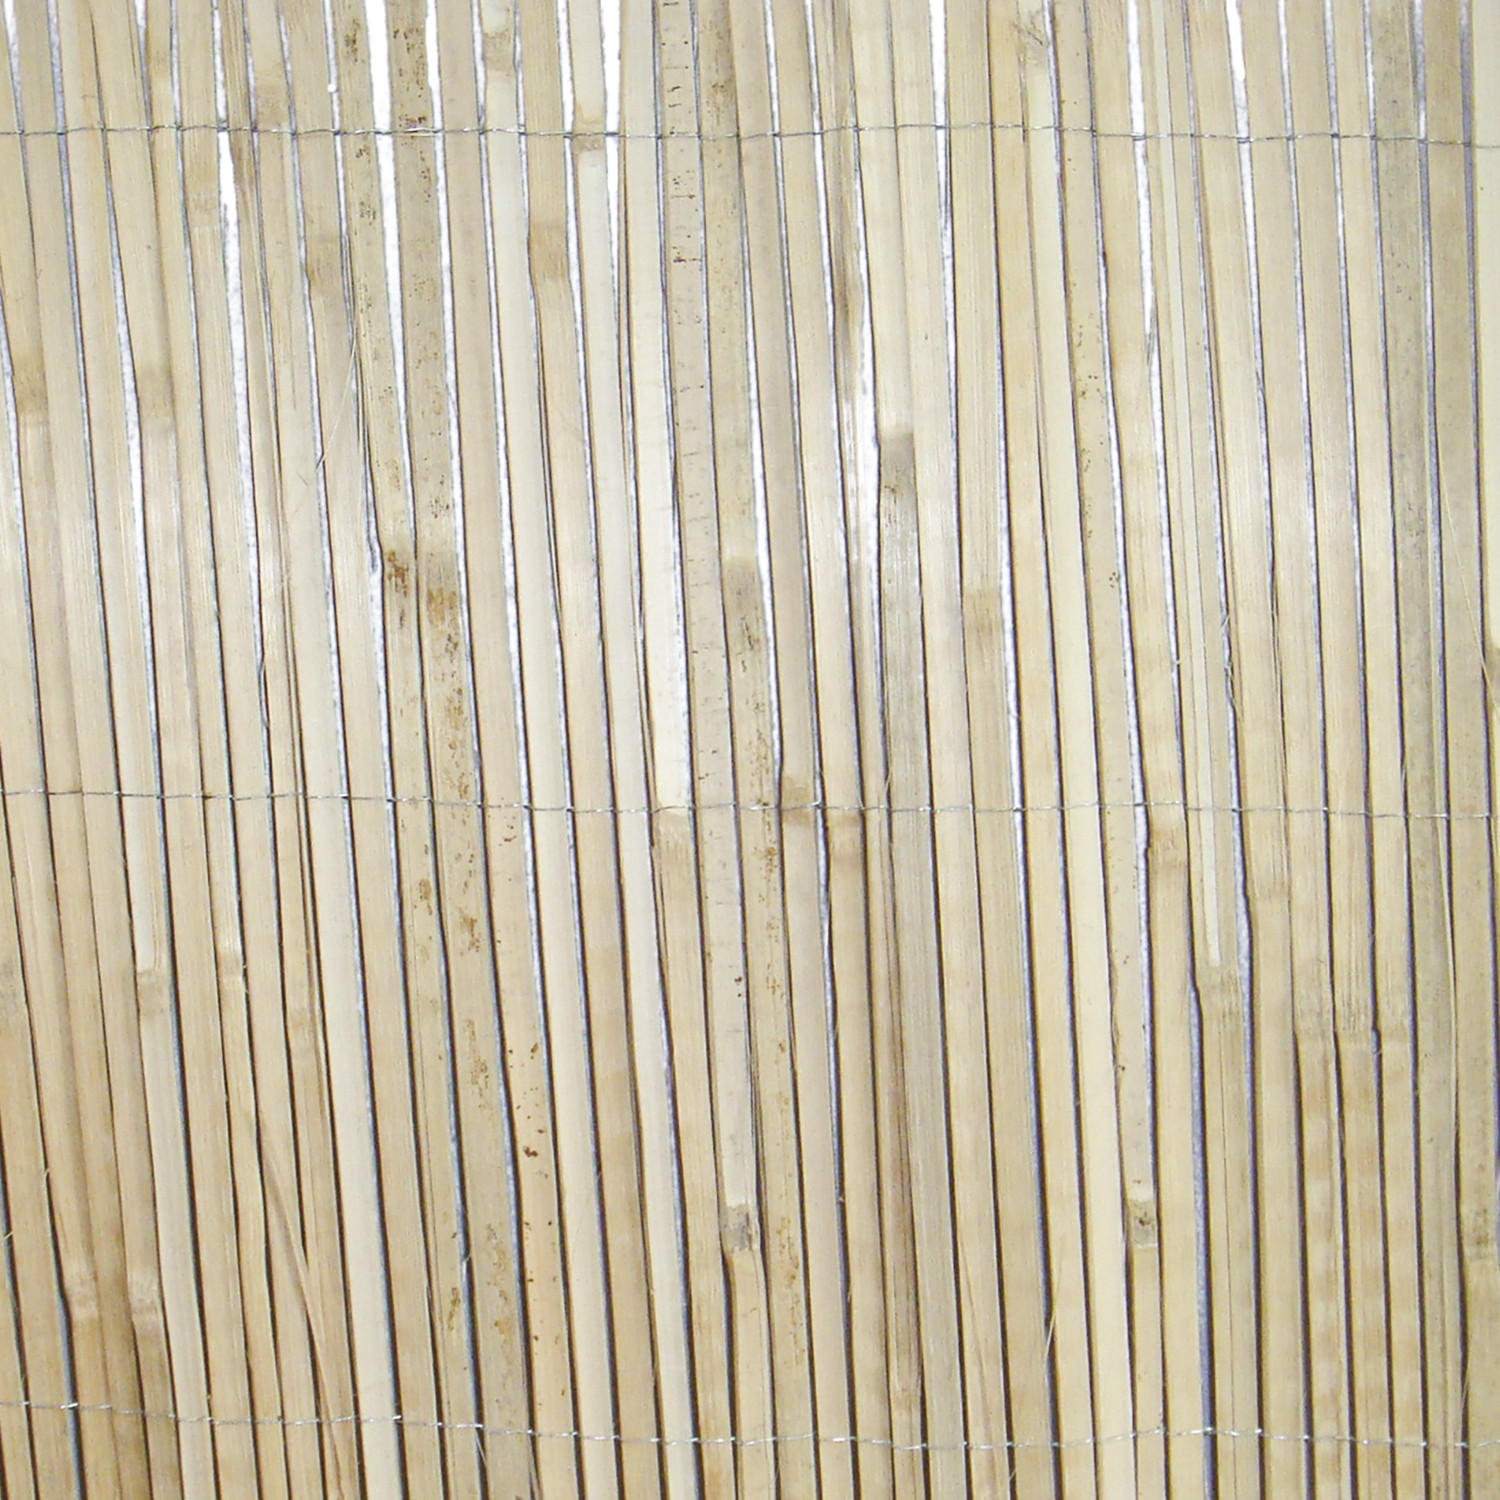 WOODSGOOD Bamboo Garden Screening 2 x 4m Image